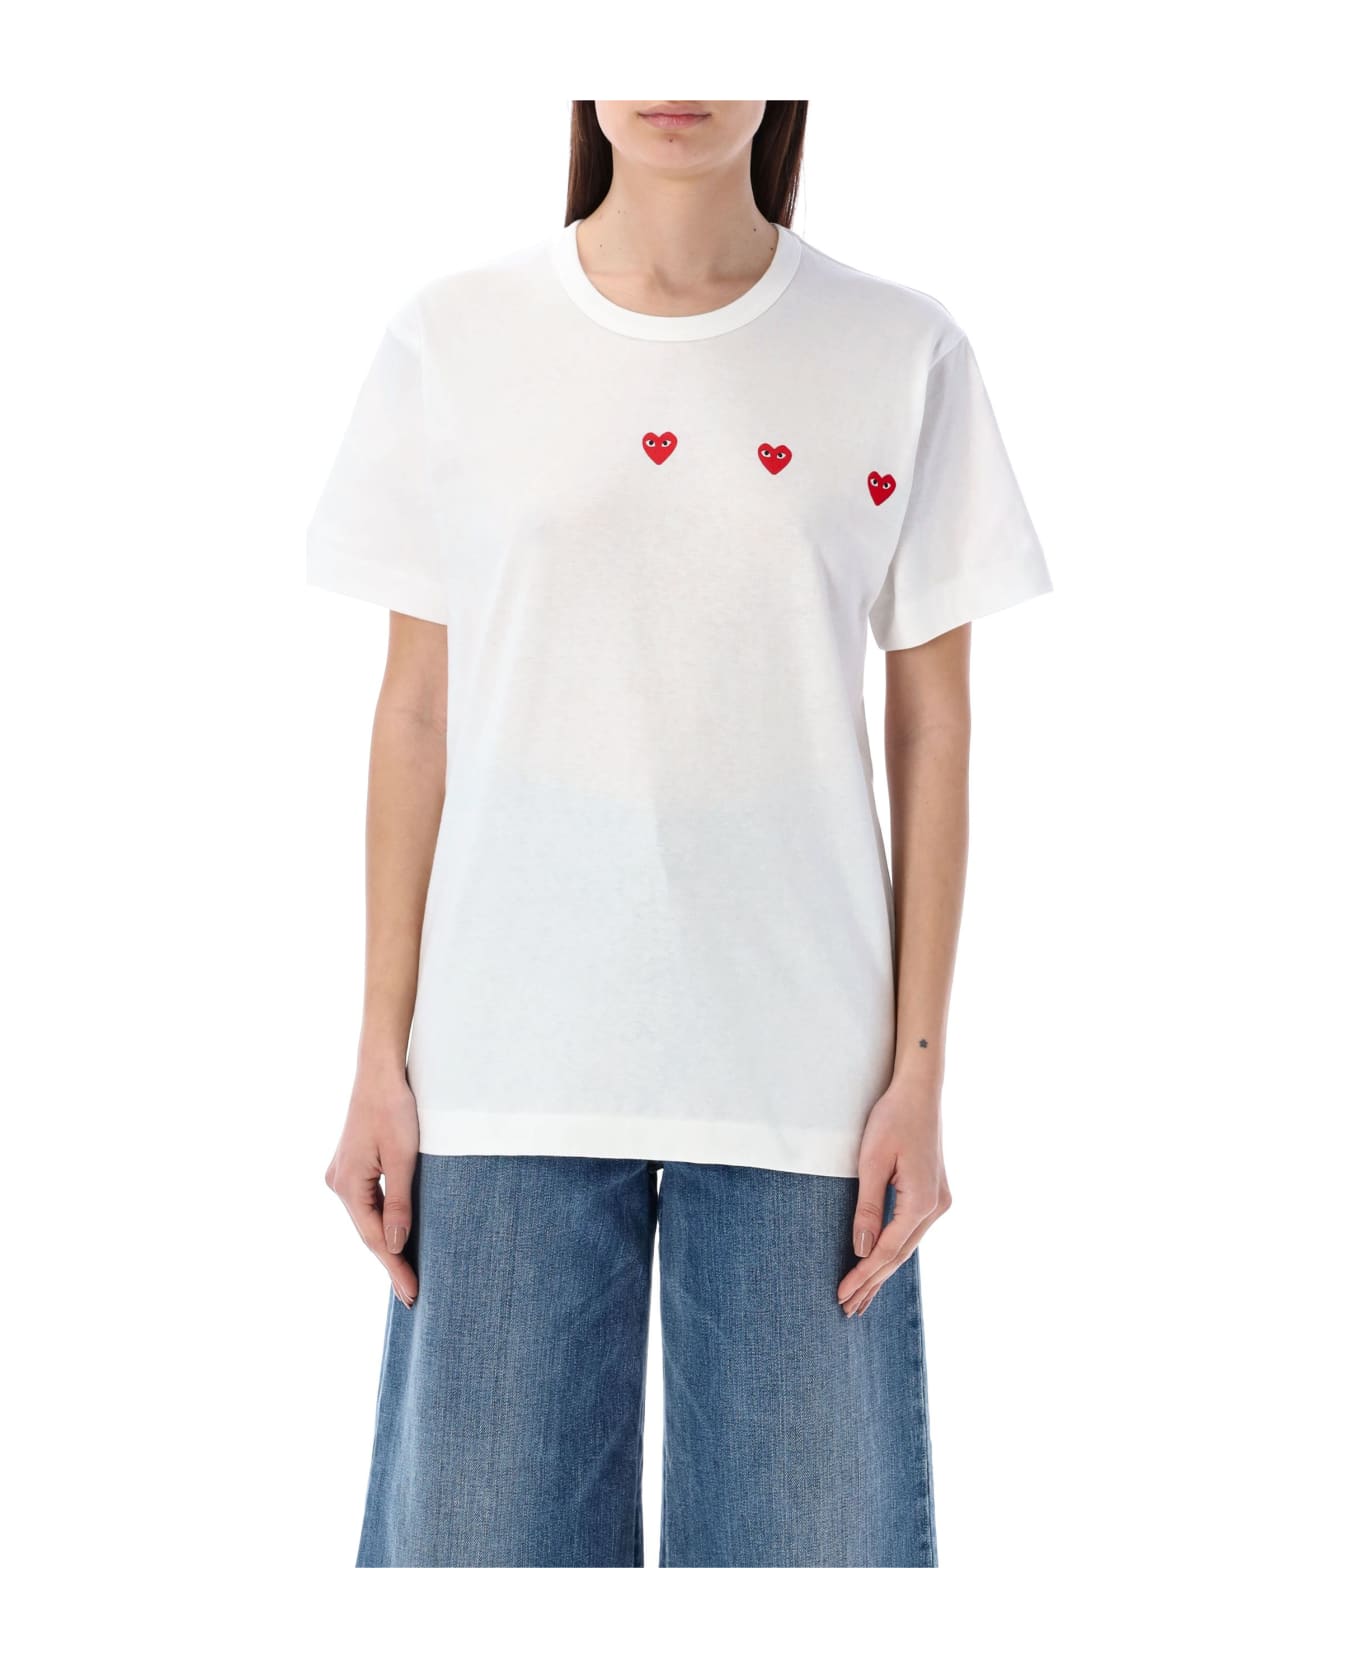 Comme des Garçons Play Hearts T-shirt - WHITE